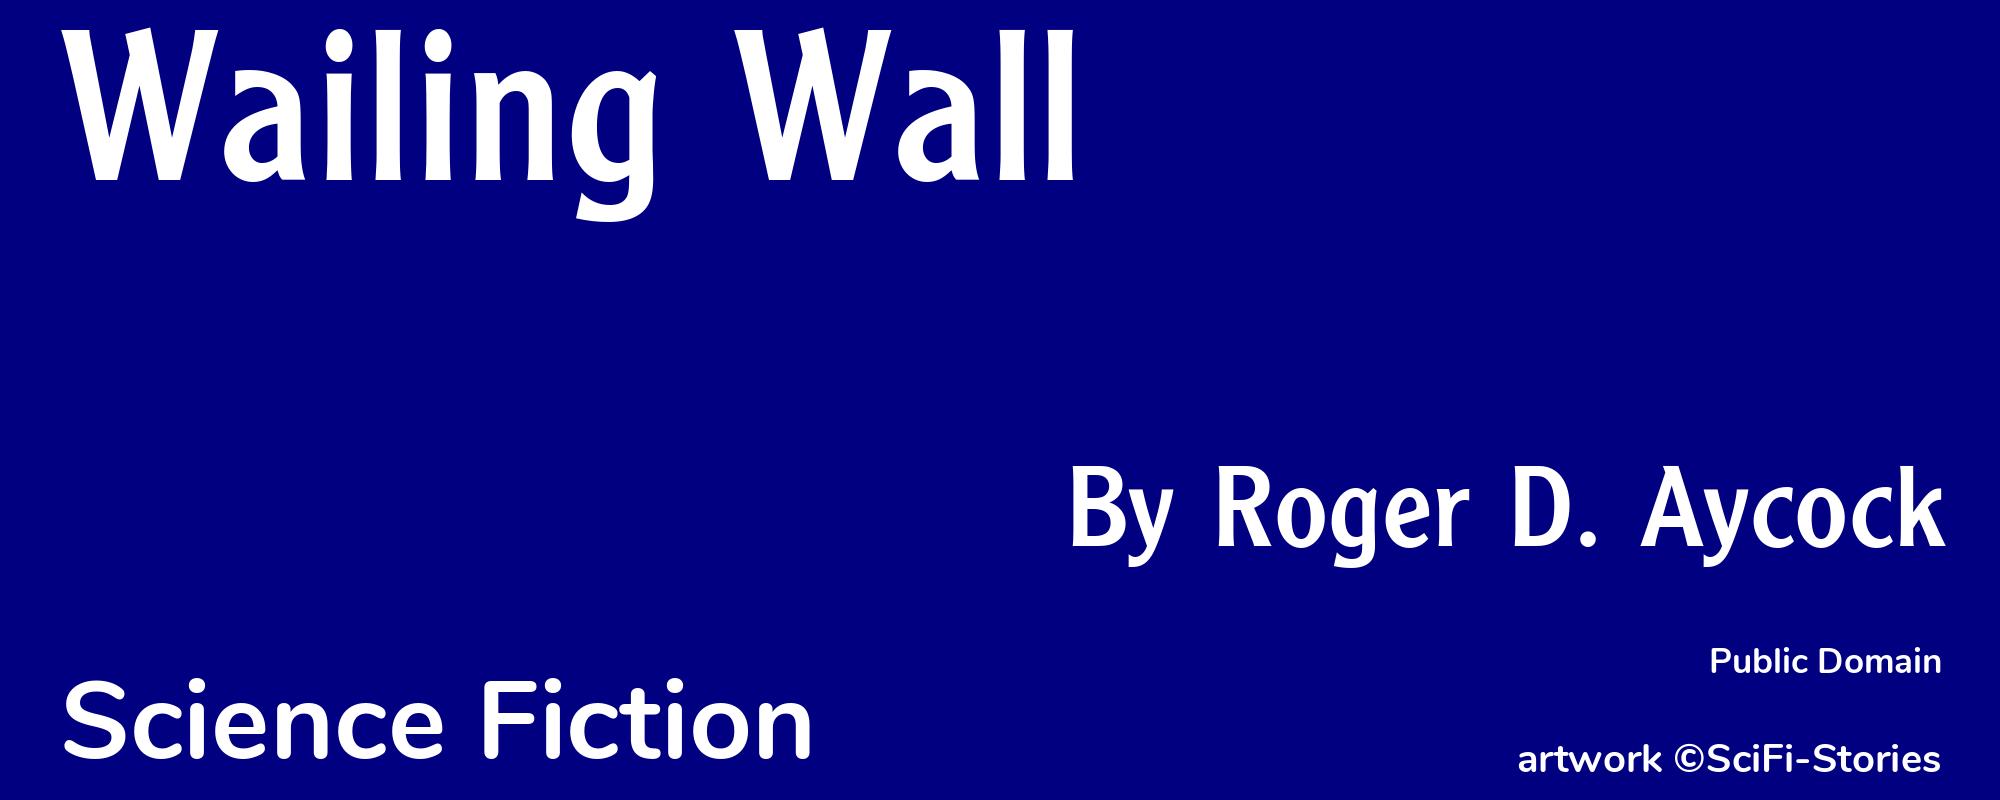 Wailing Wall - Cover